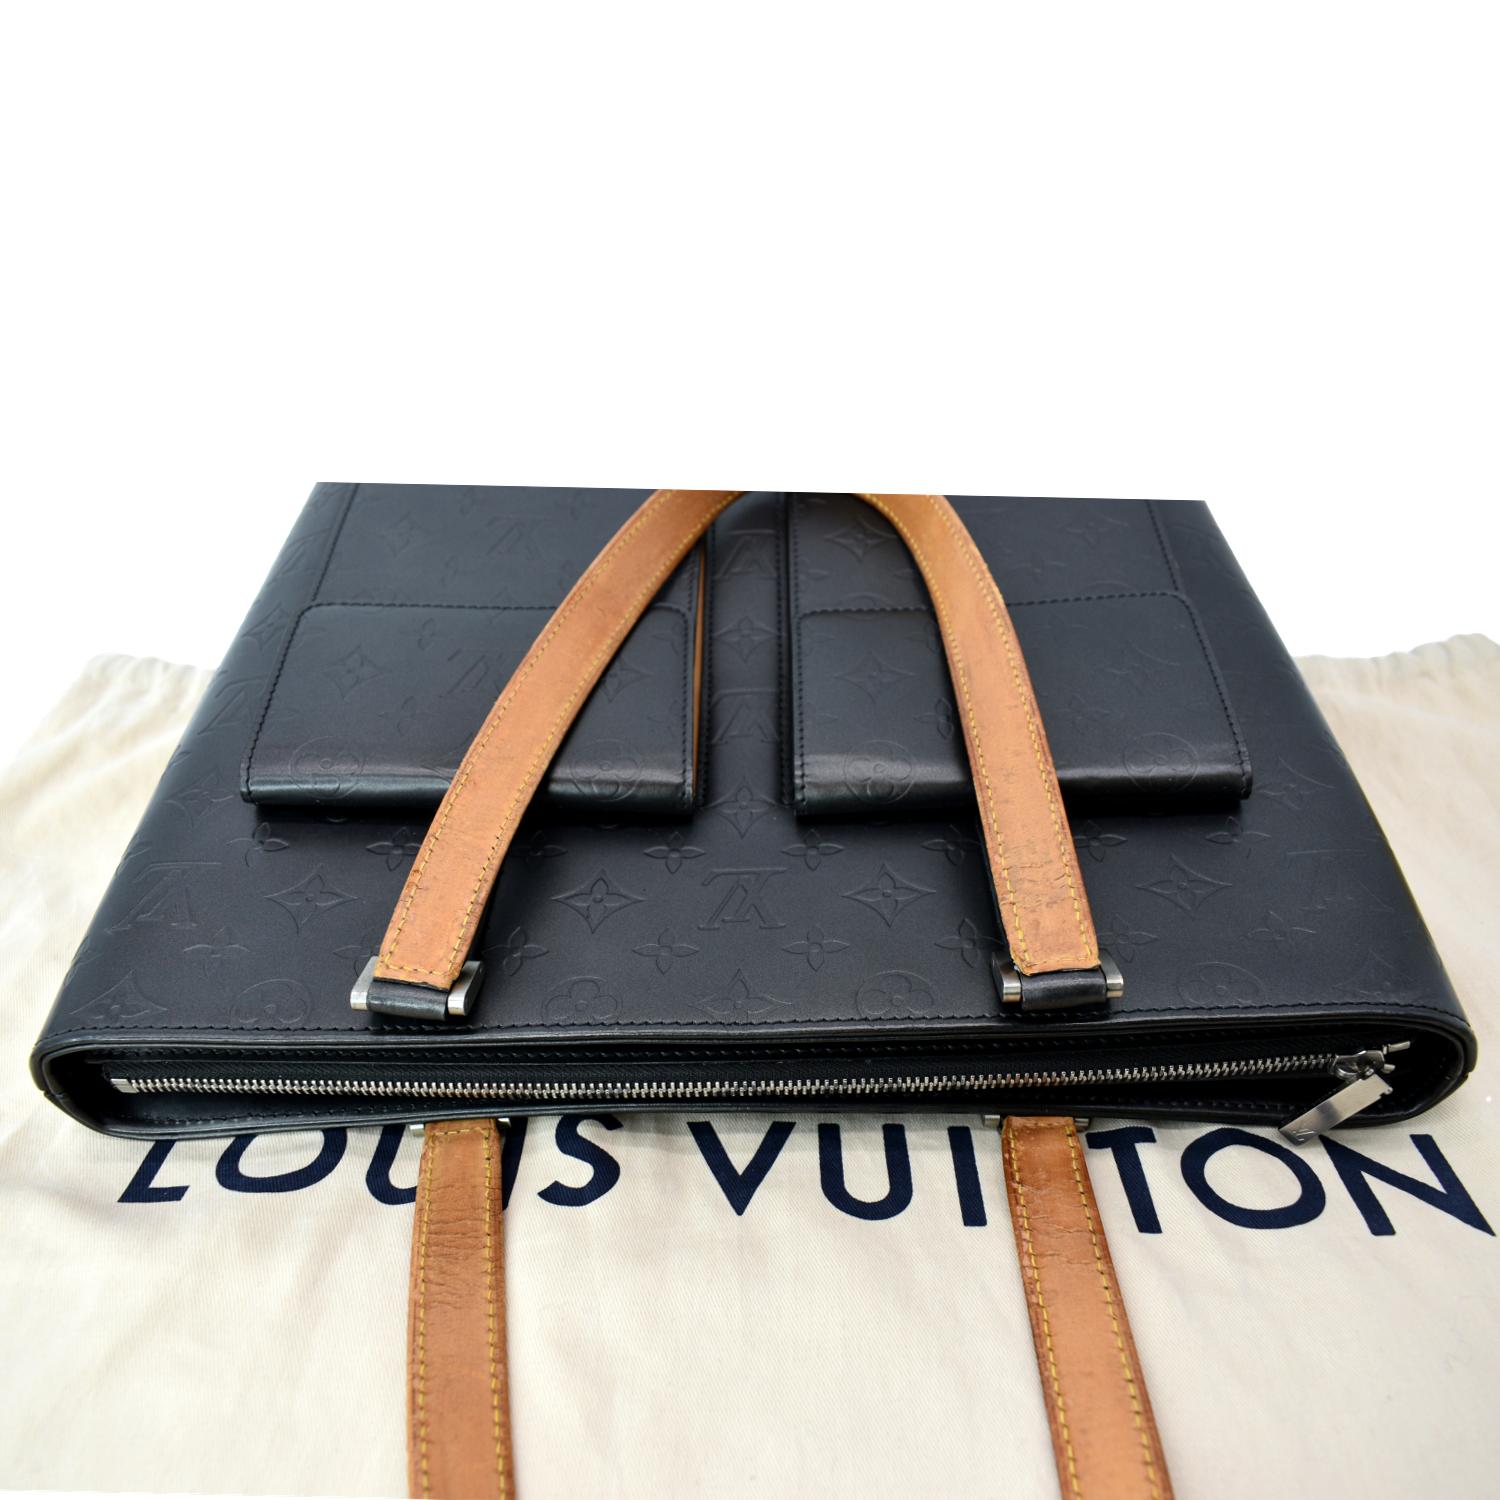 Sold at Auction: LOUIS VUITTON VINYL LOGO TOTE BAG. LEATHER TRIMME